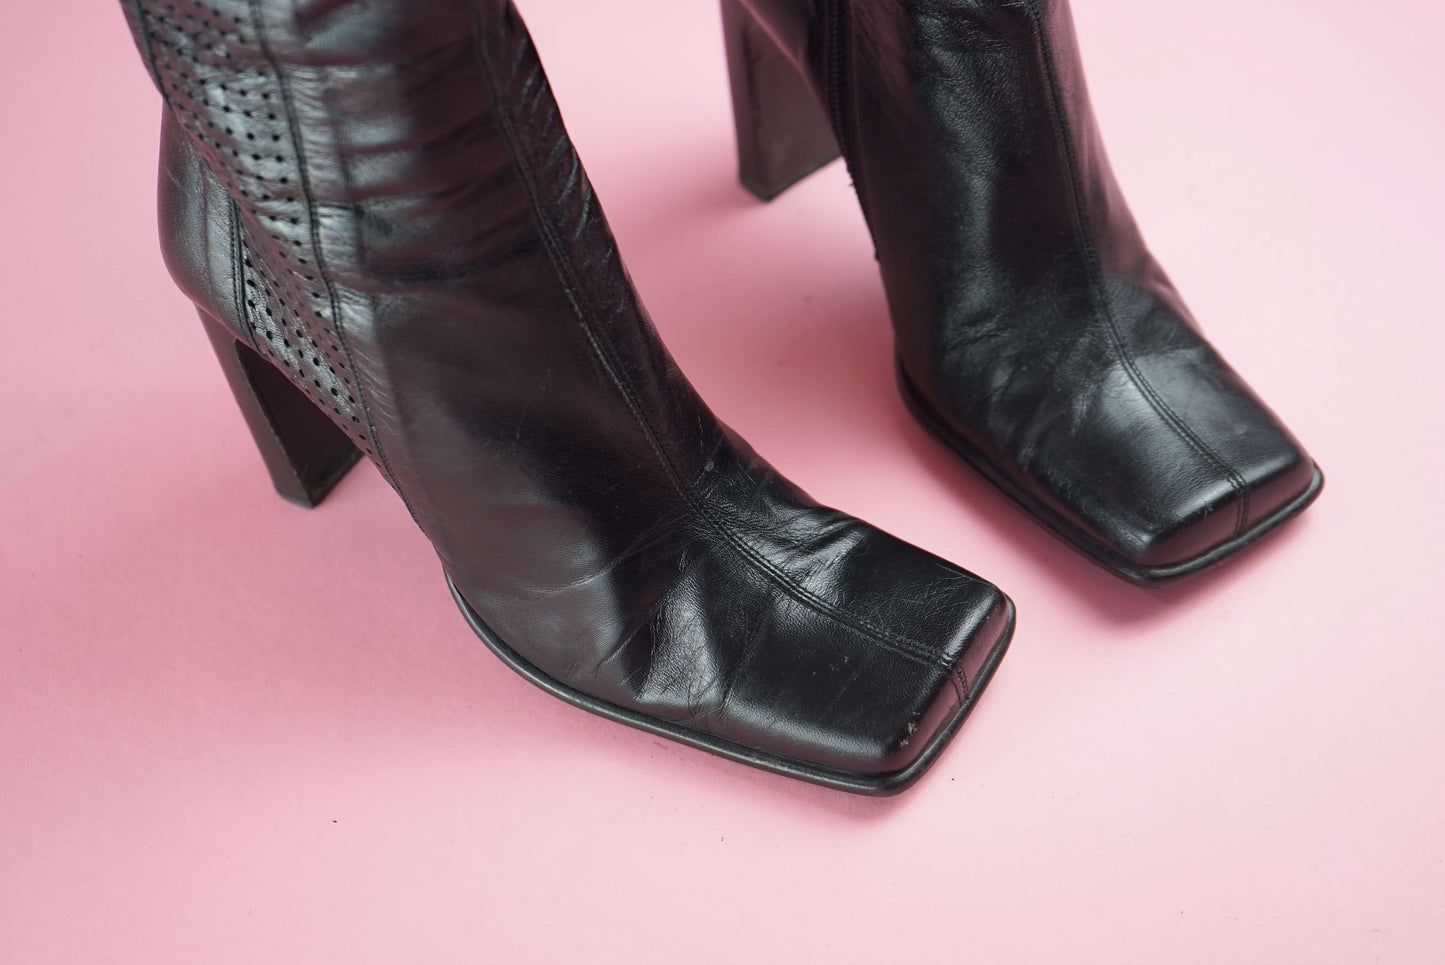 Square Toe Black Vintage Boots High Heel UK Size 6.5-7/EU 39.5-40